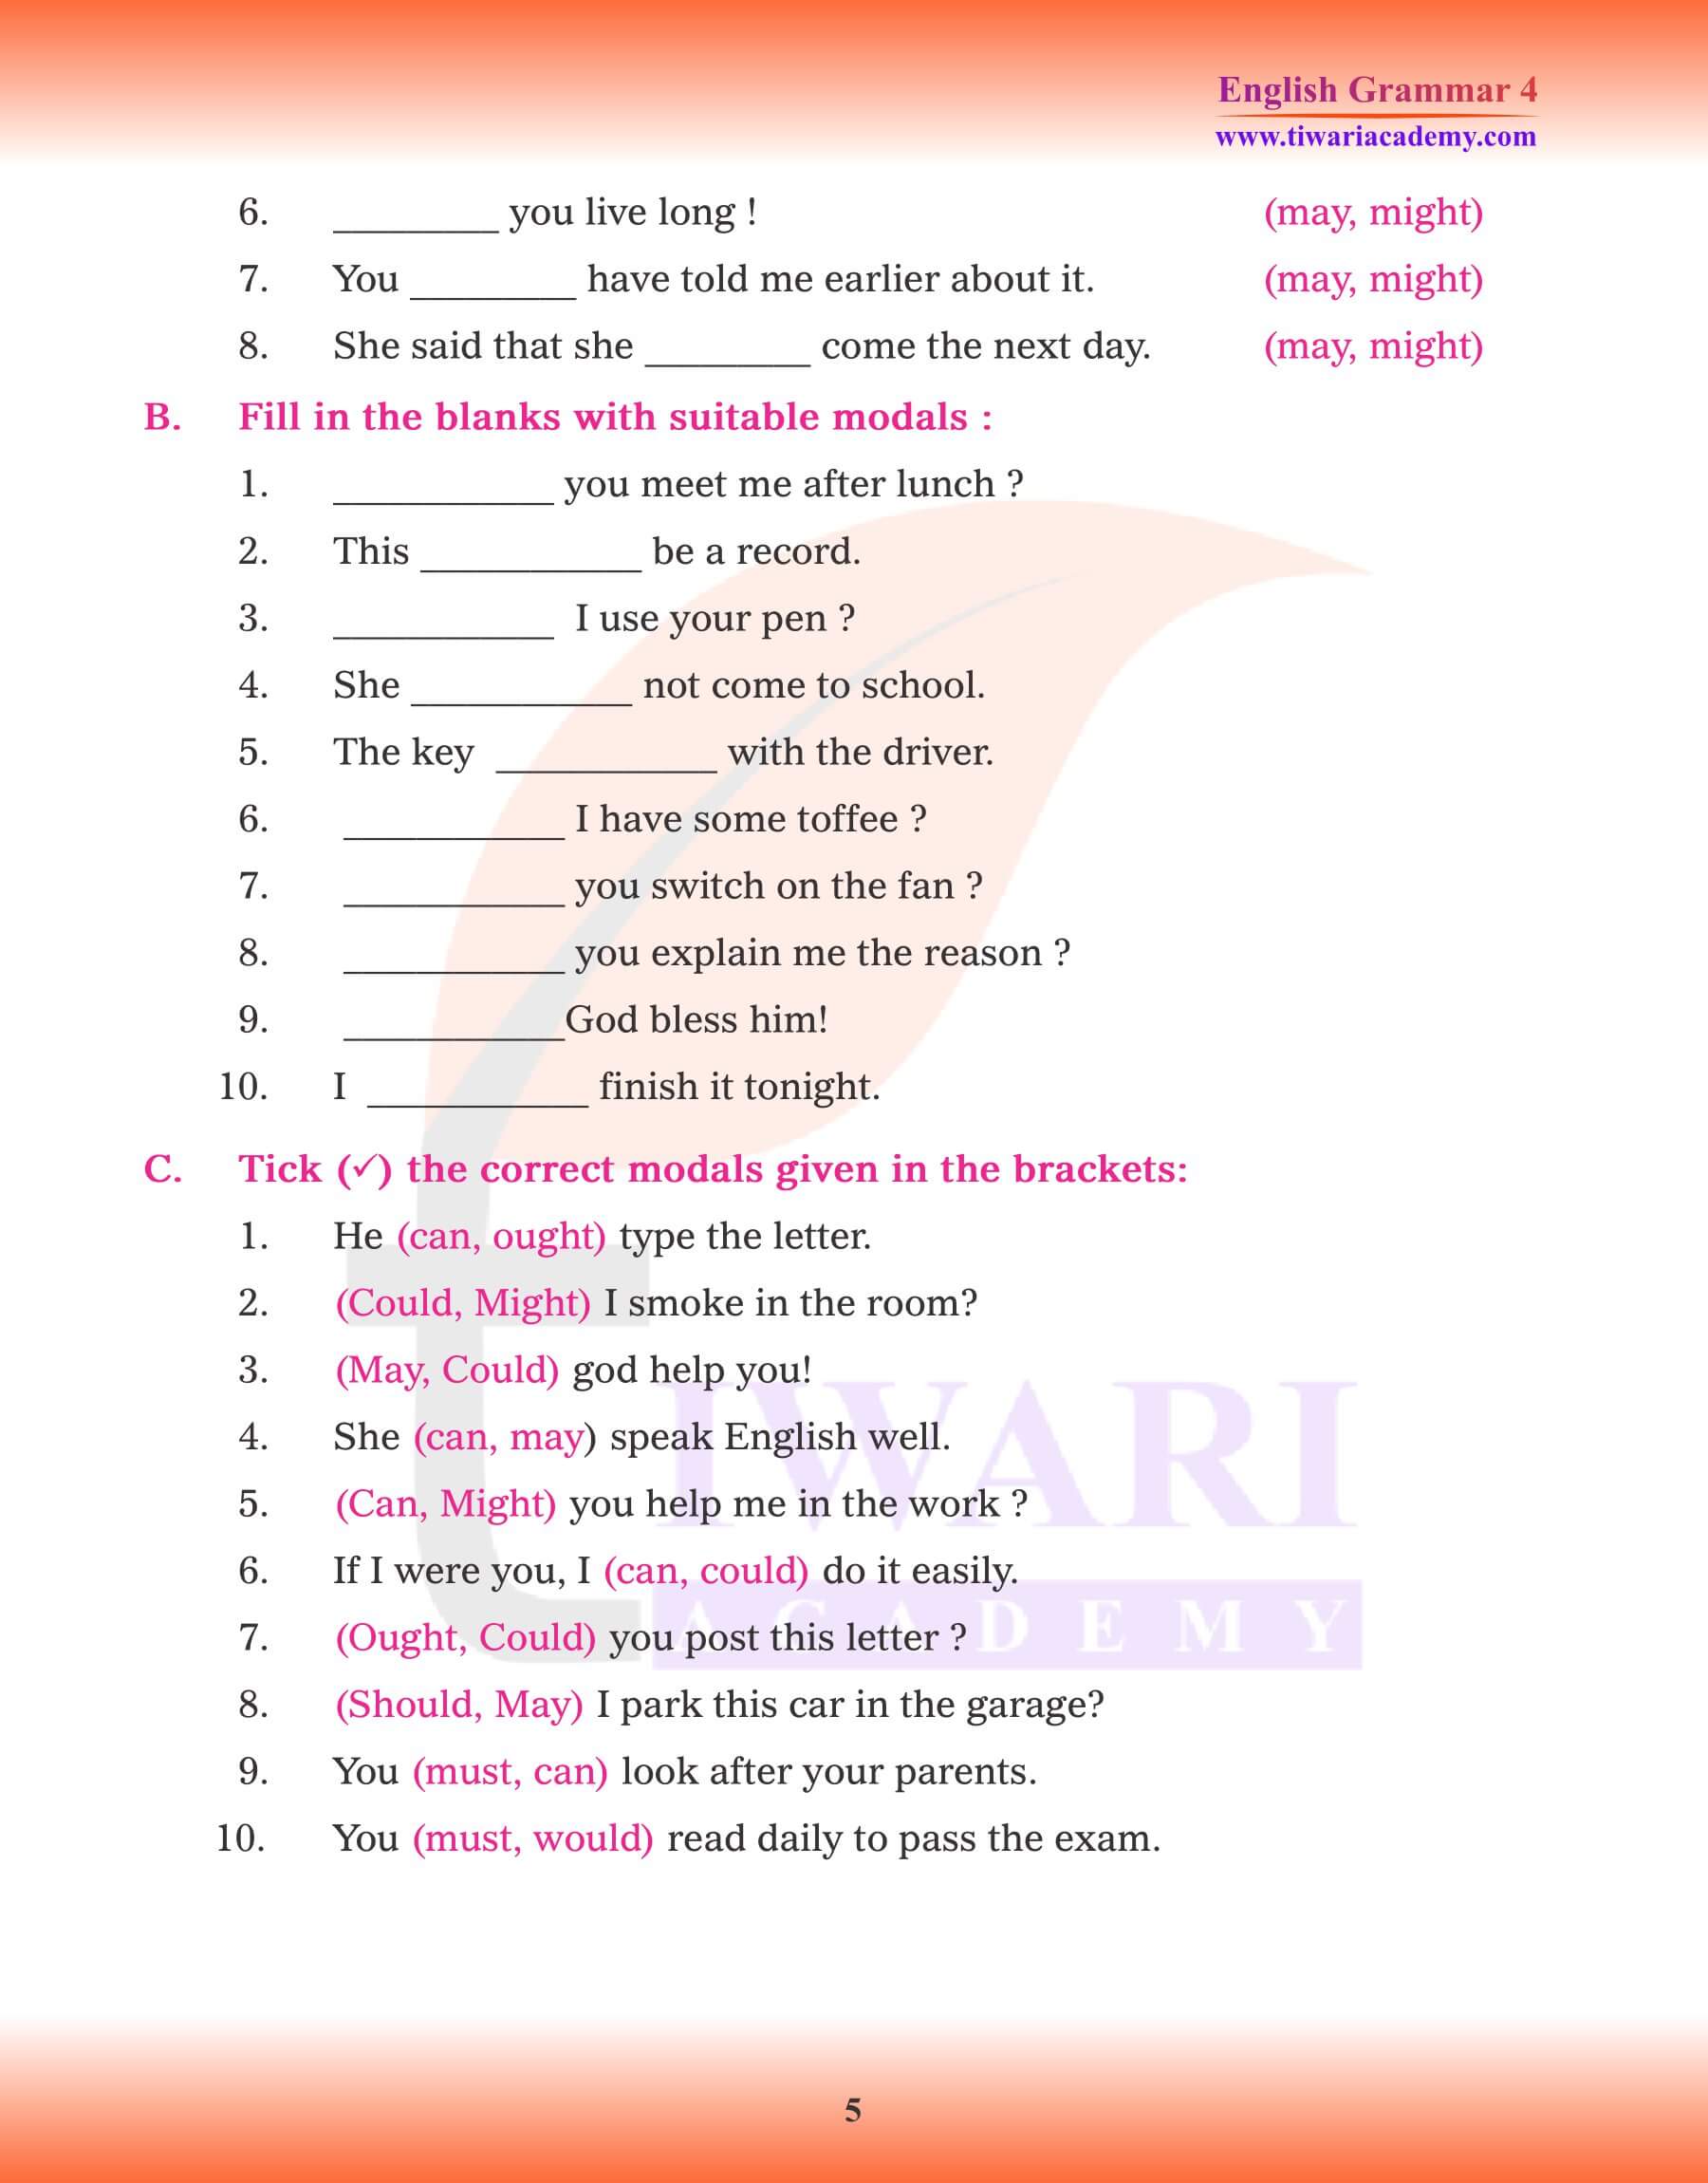 Class 4 English Grammar Examples of Modals